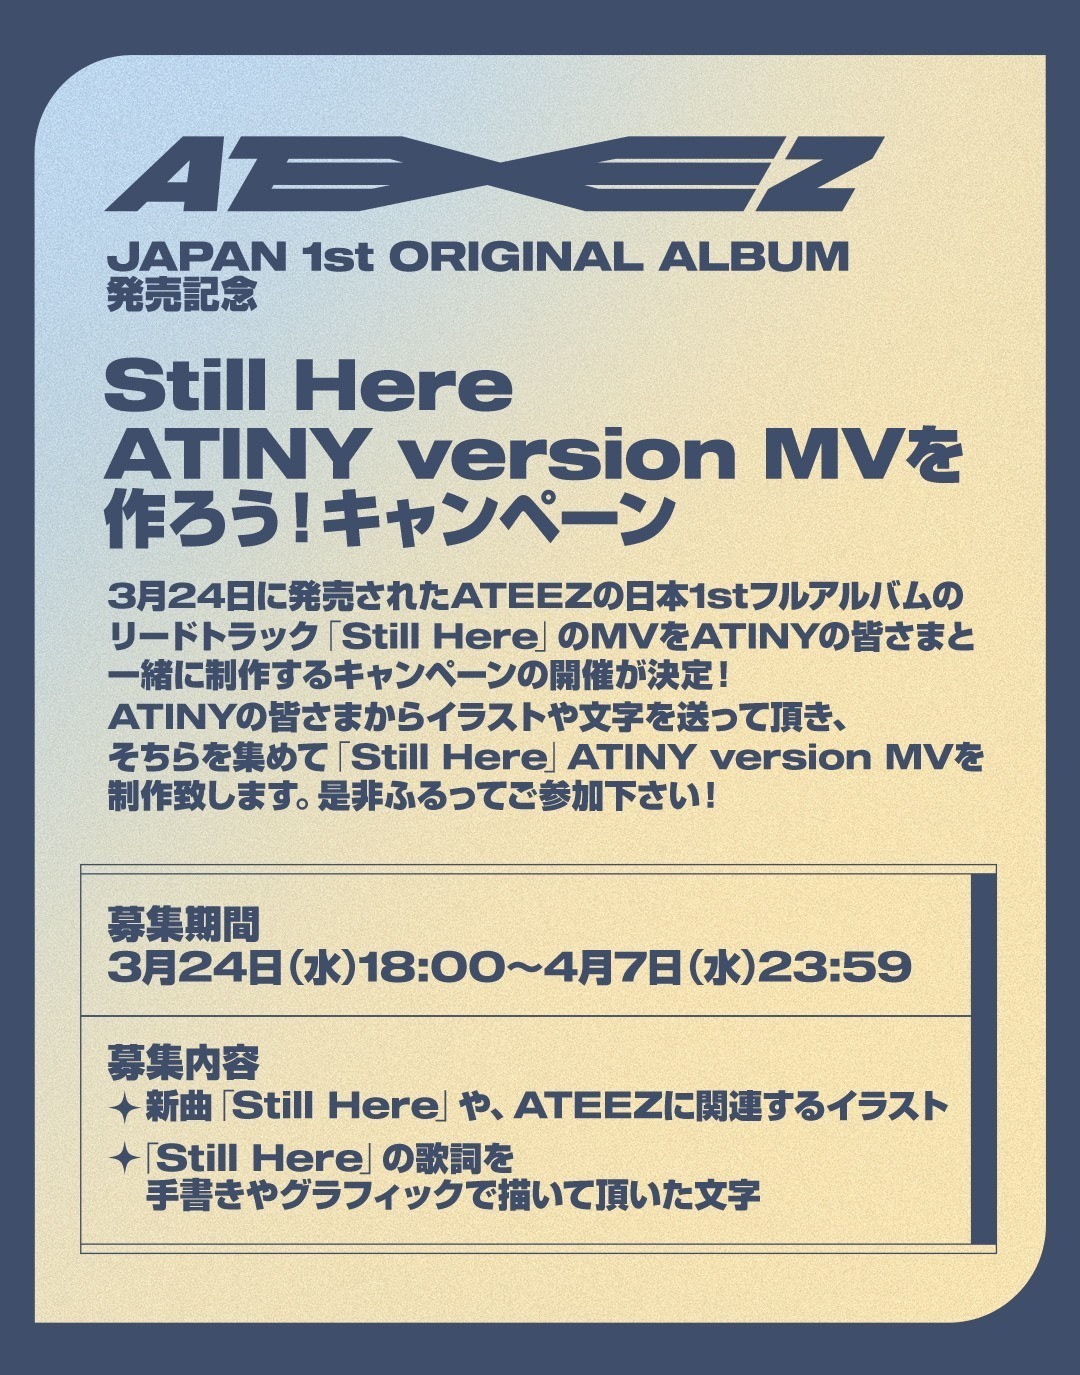 Ateez Japan1st Original Album発売記念 Still Here Atiny Version Mvを作ろう キャンペーン Ateez Japan Official Site